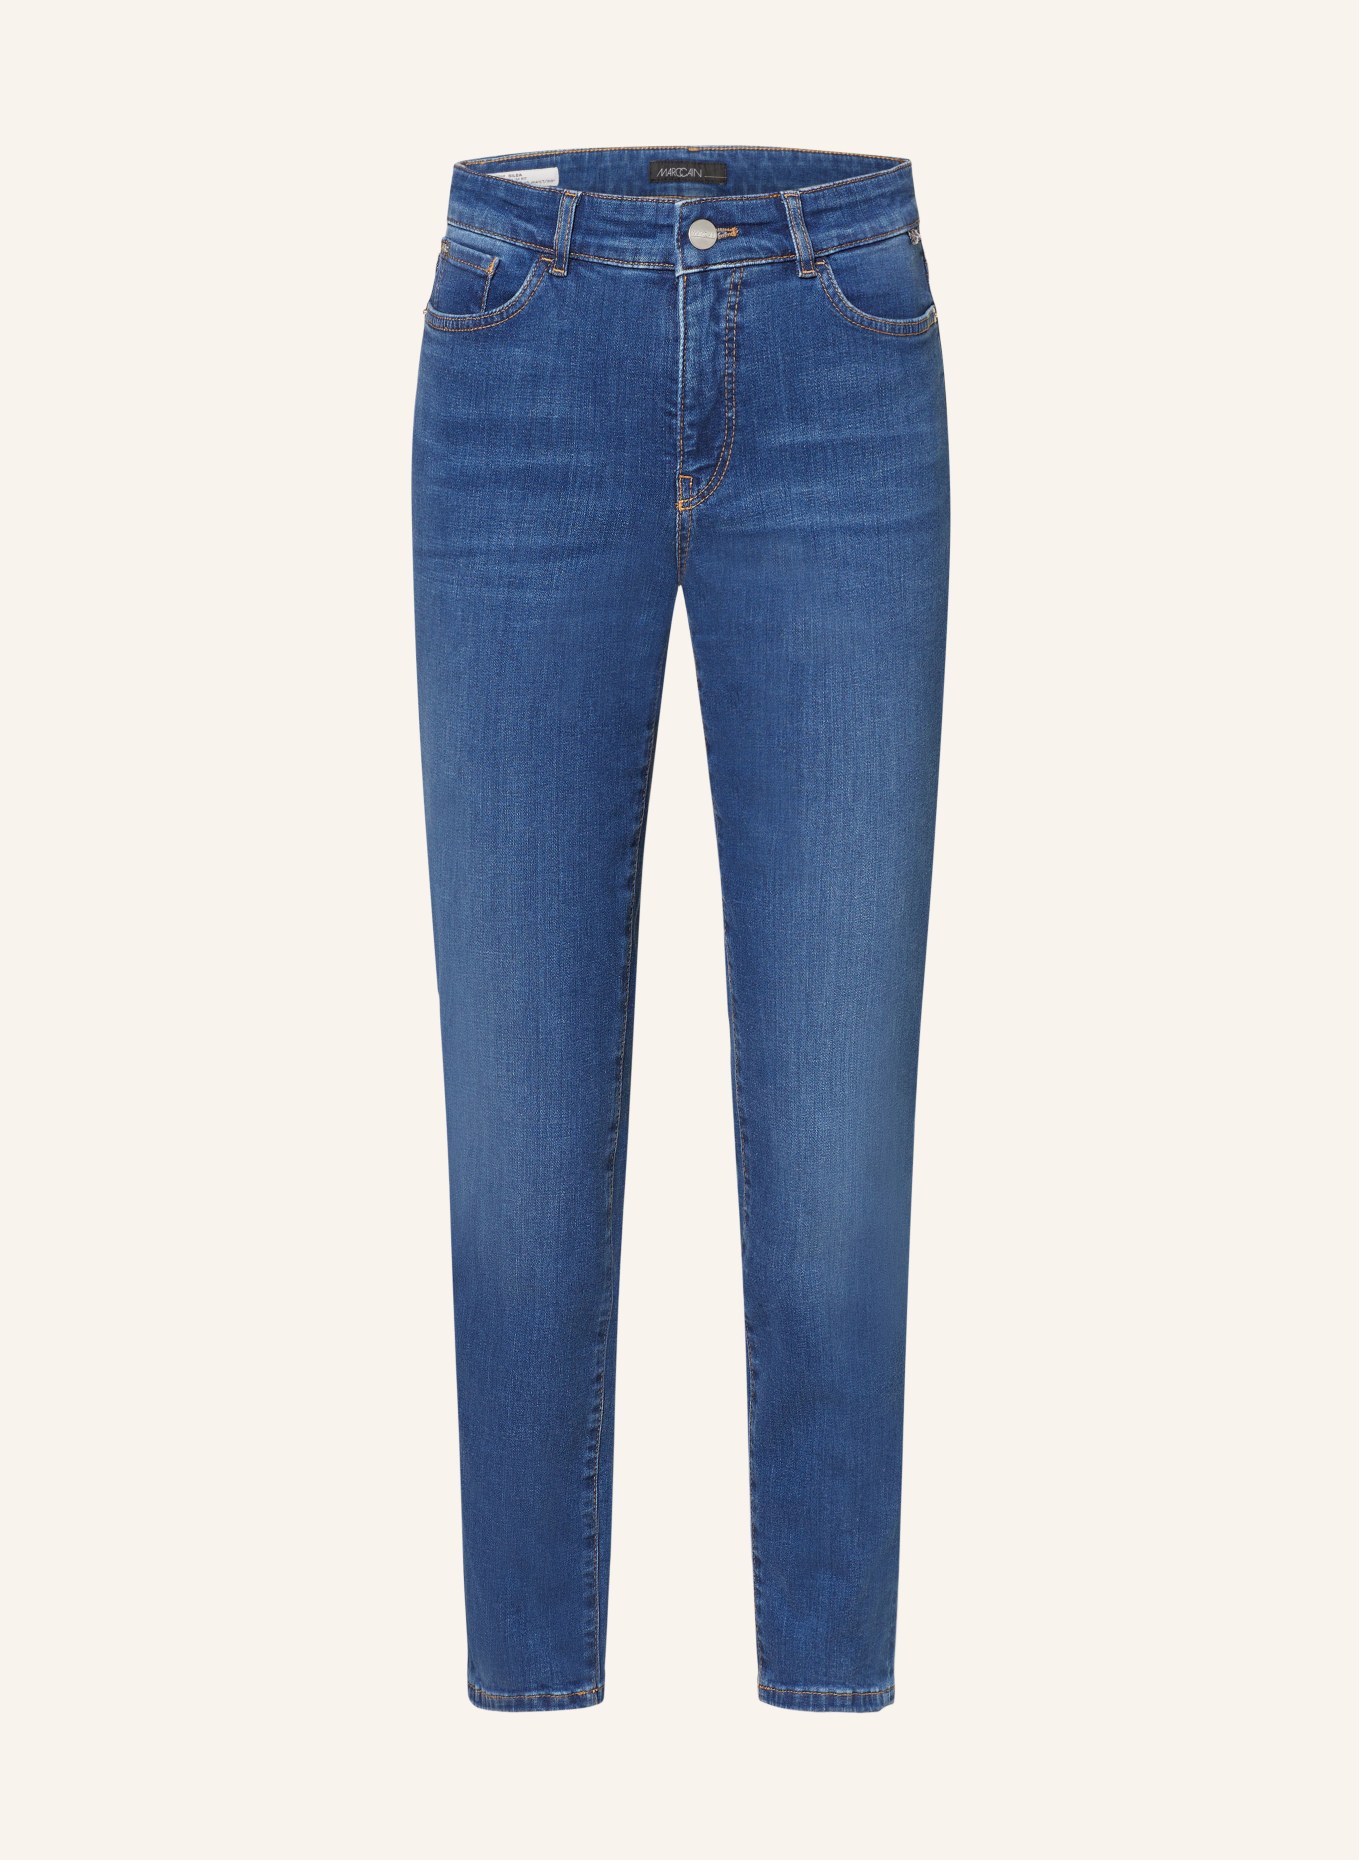 MARC CAIN Jeans SILEA, Farbe: 353 blue denim (Bild 1)